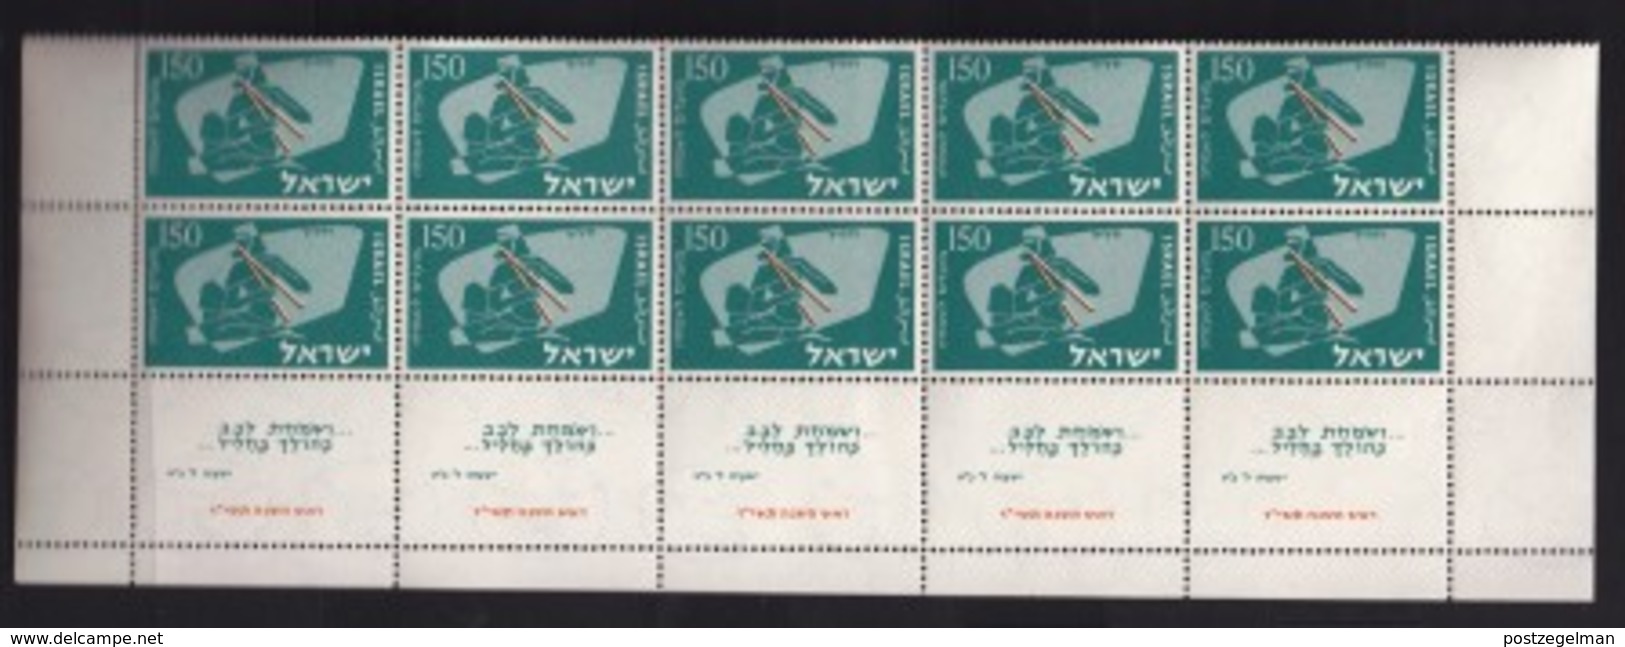 ISRAEL, 1956, Dubbel Bottom Row, Mint Stamps, New Year - Music, SG 131-133, FS 905 - Ongebruikt (met Tabs)